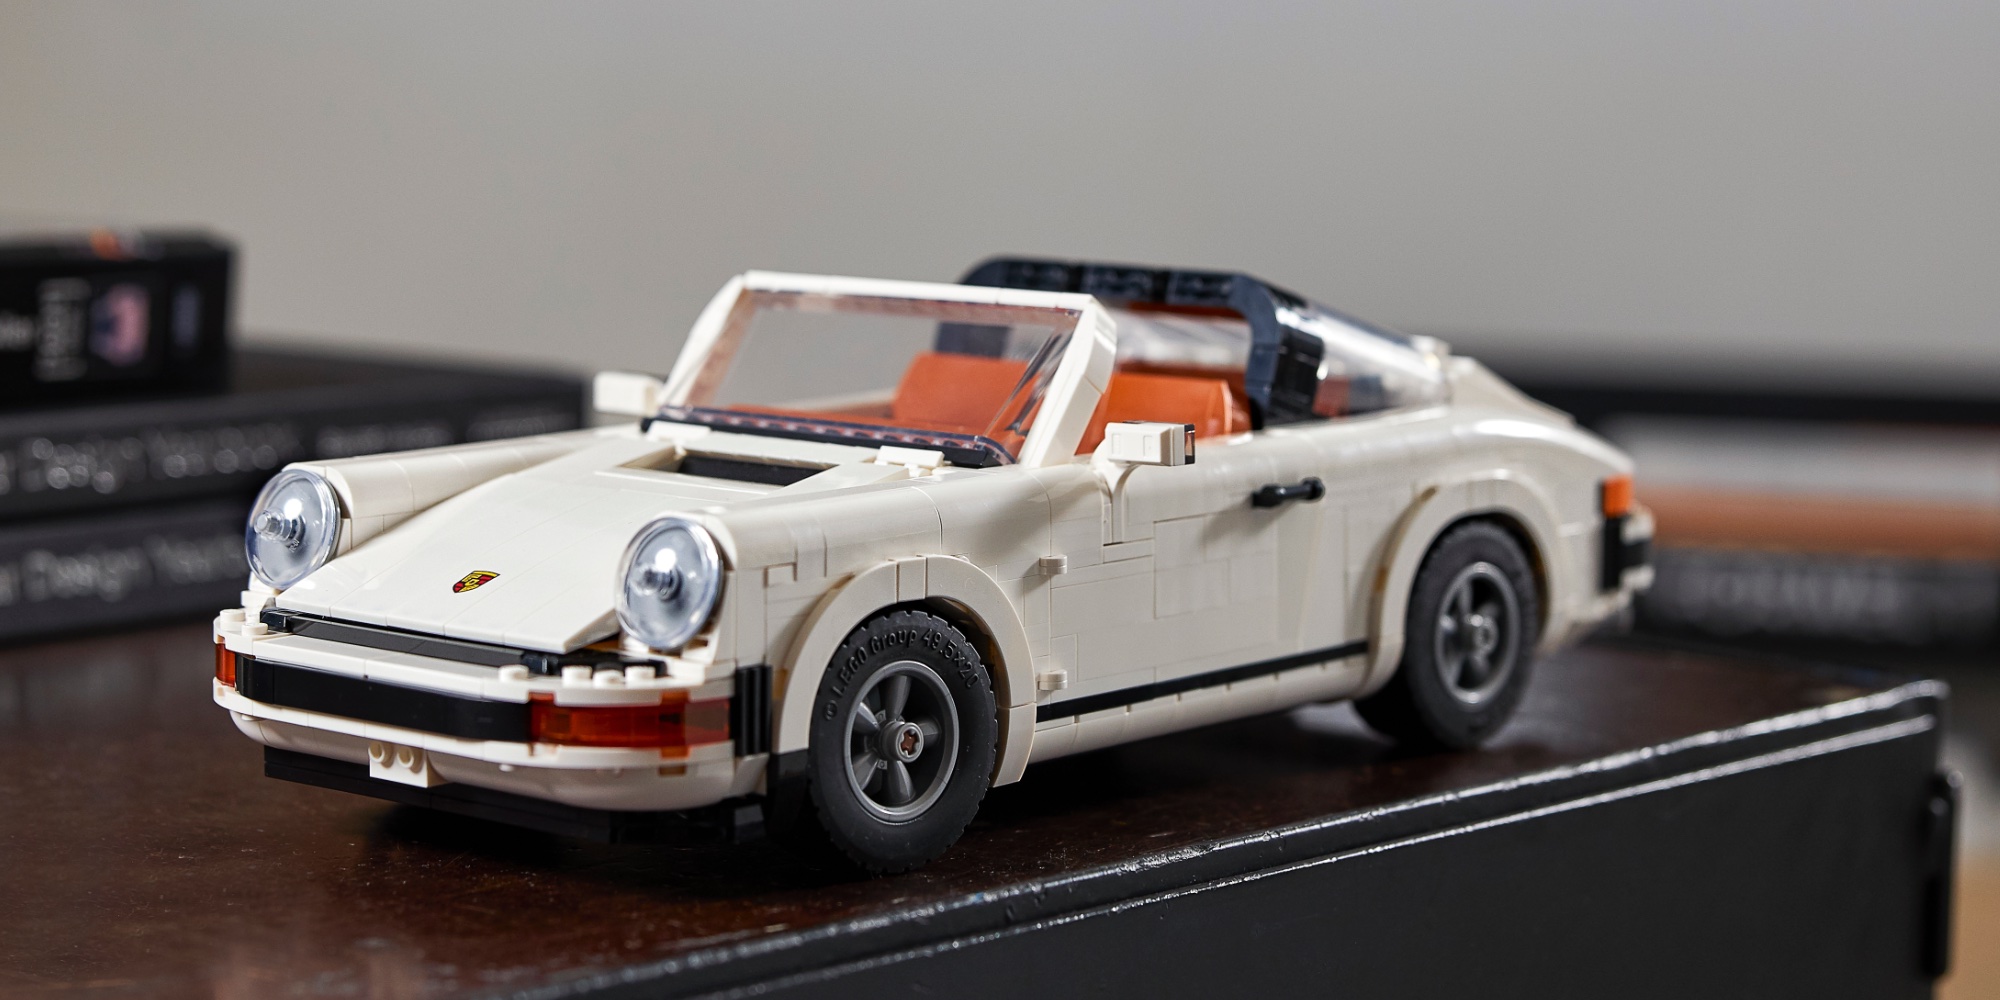 LEGO's new 1,458-piece Porsche 911 sports car sees very first